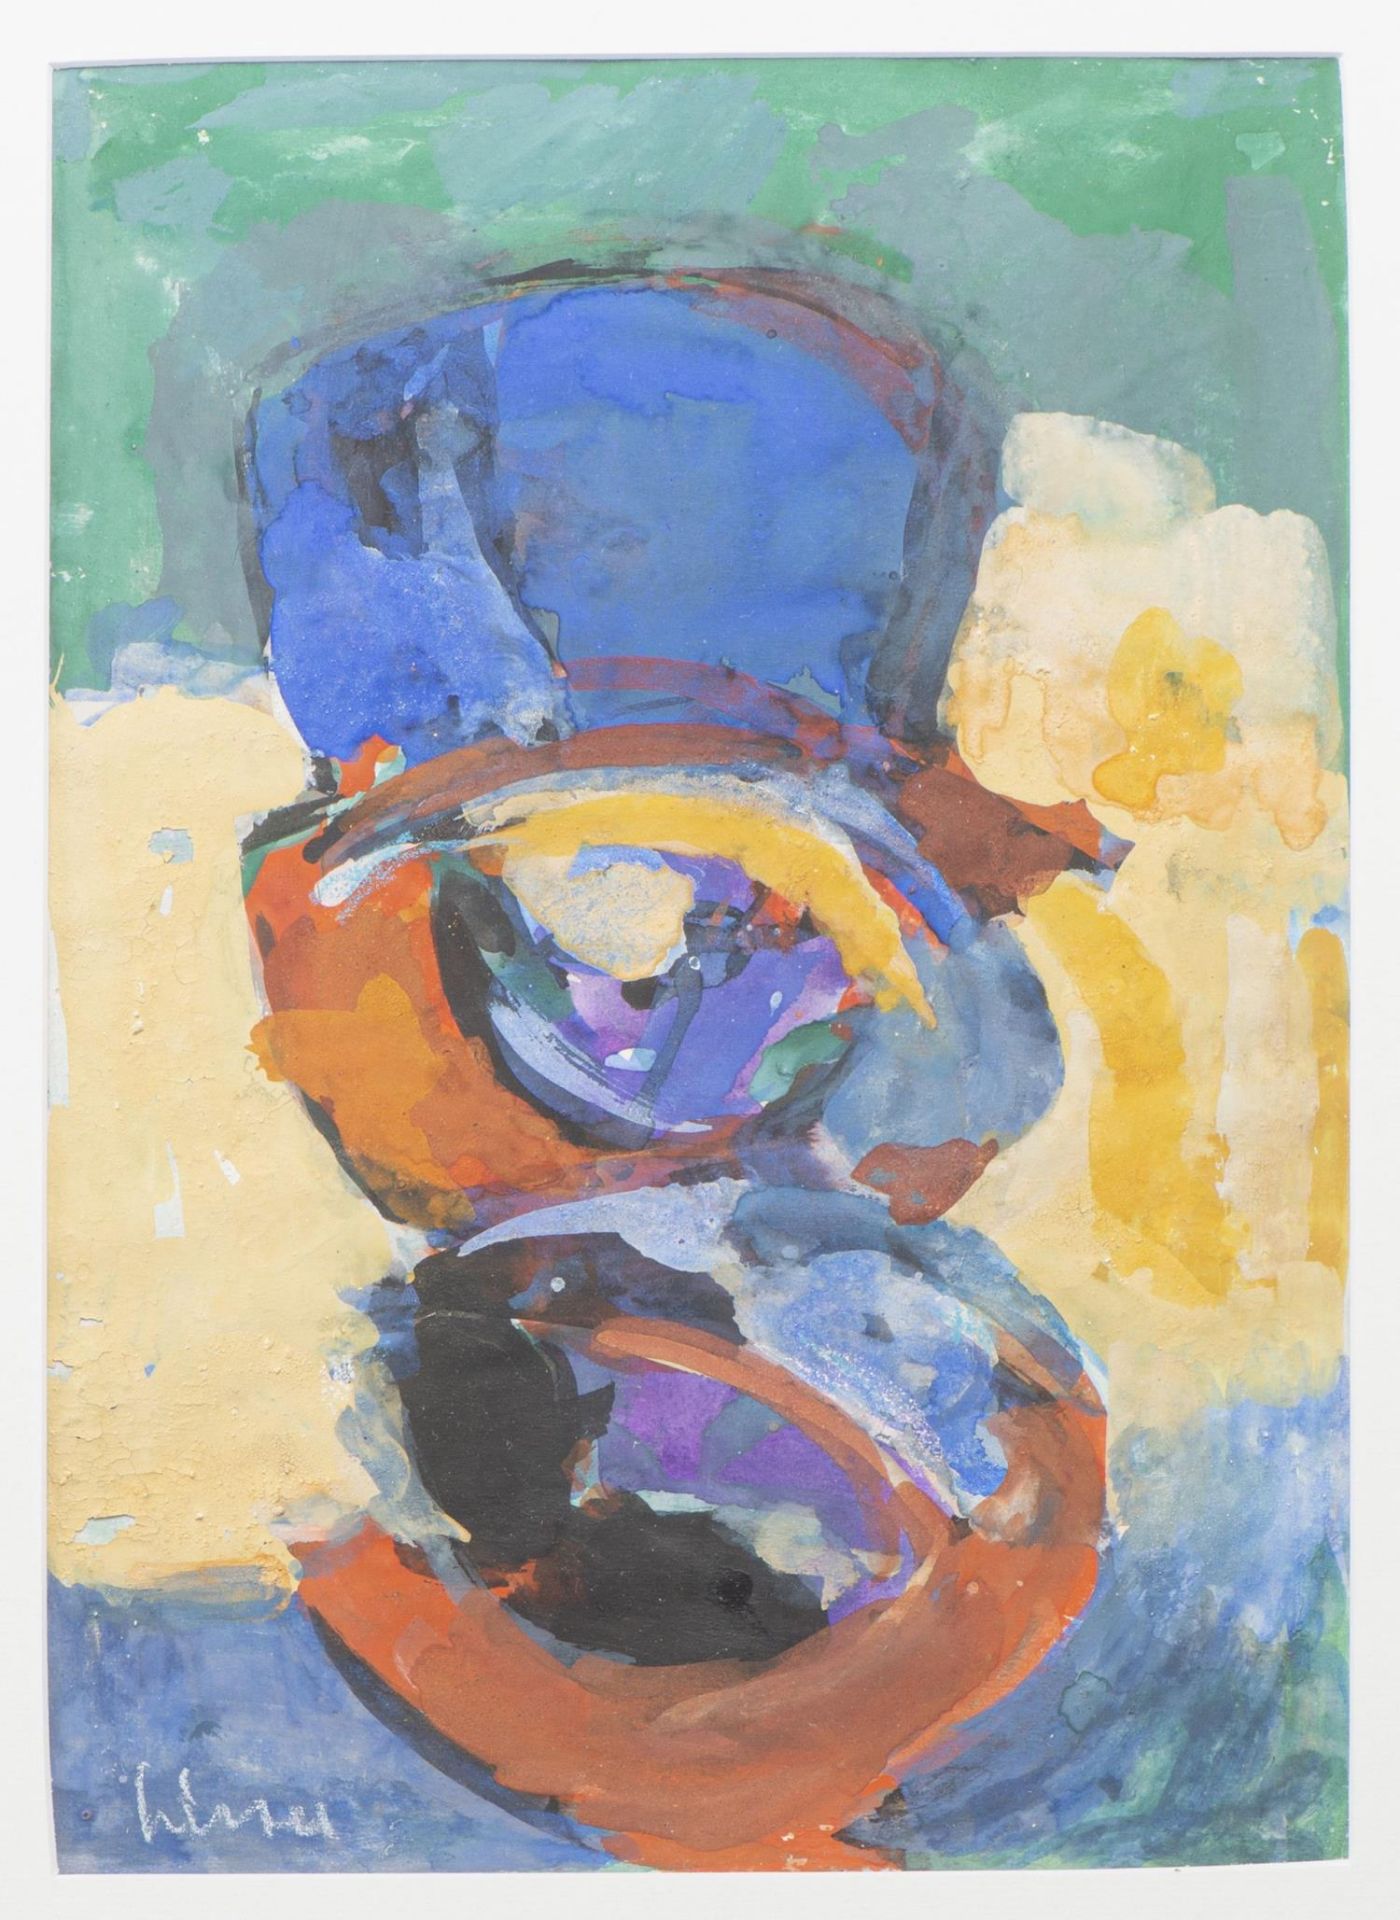 Carl LINER (1914-1997) "Variation", 1979